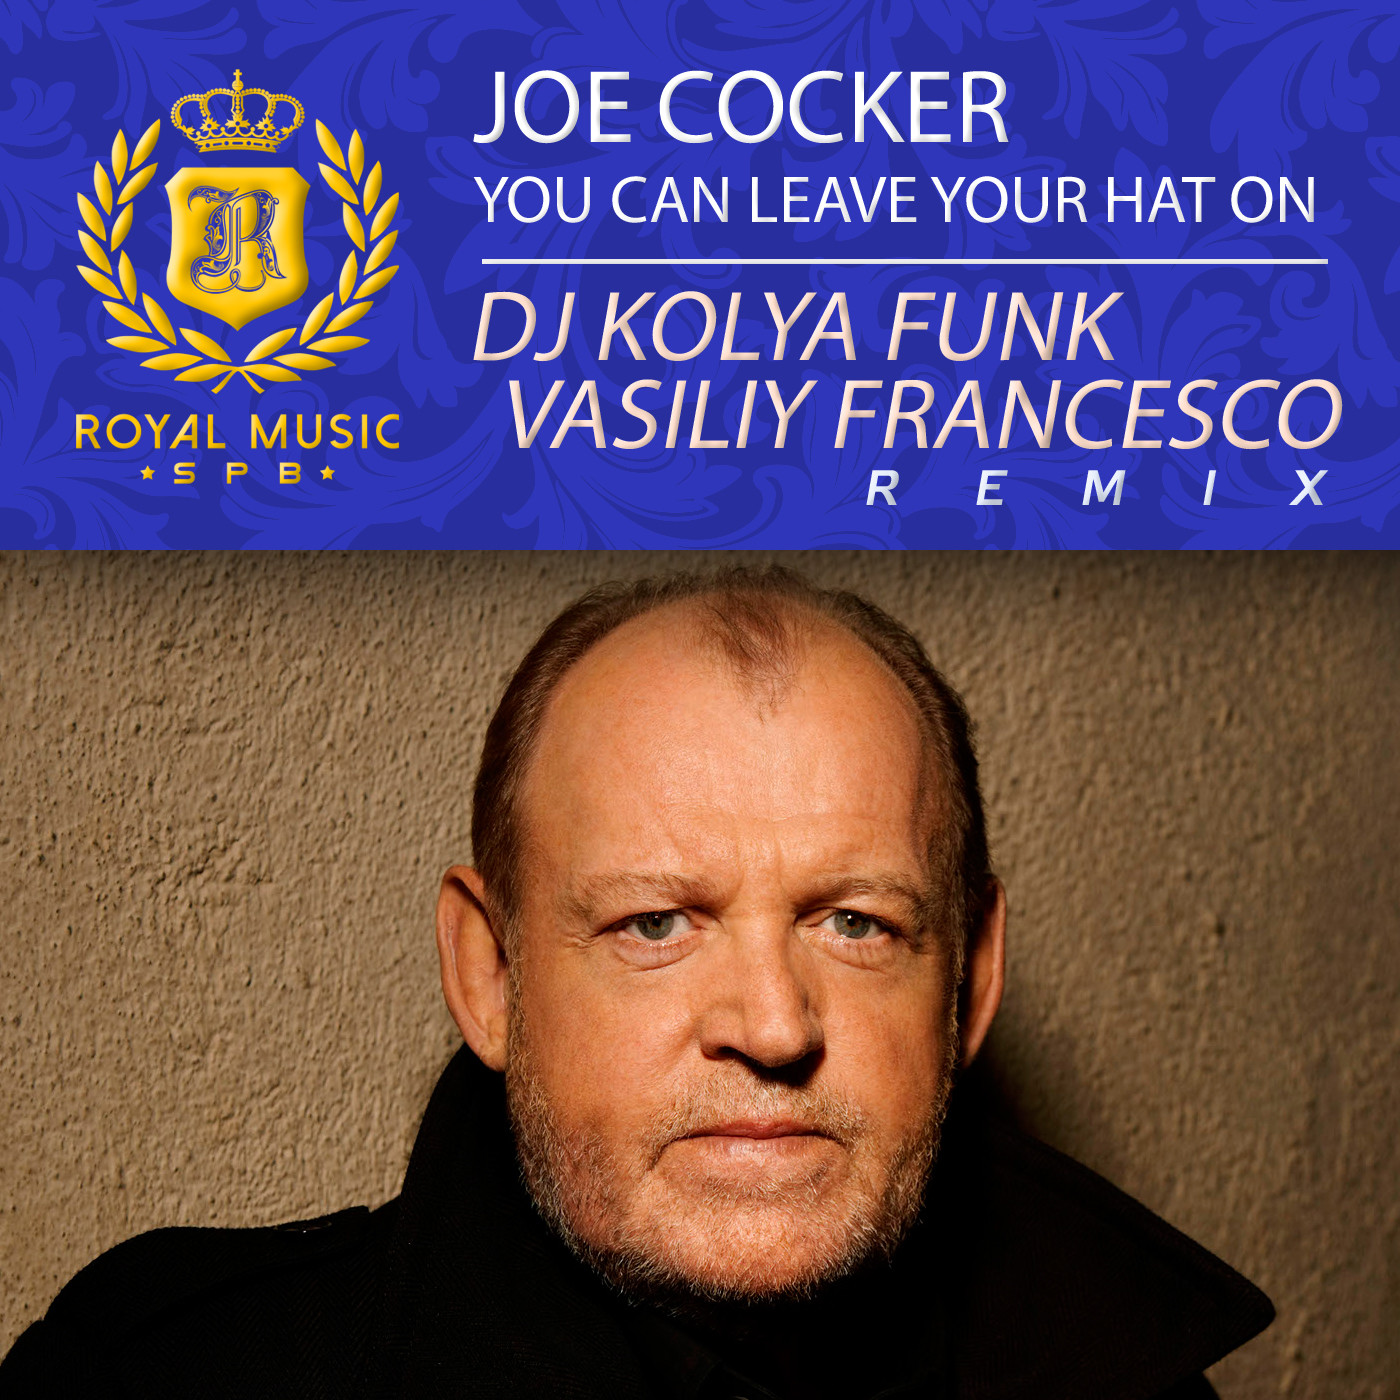 Joe Cocker You Can Leave Your Hat On Dj Kolya Funk And Vasiliy Francesco Remix Dj Kolya Funk